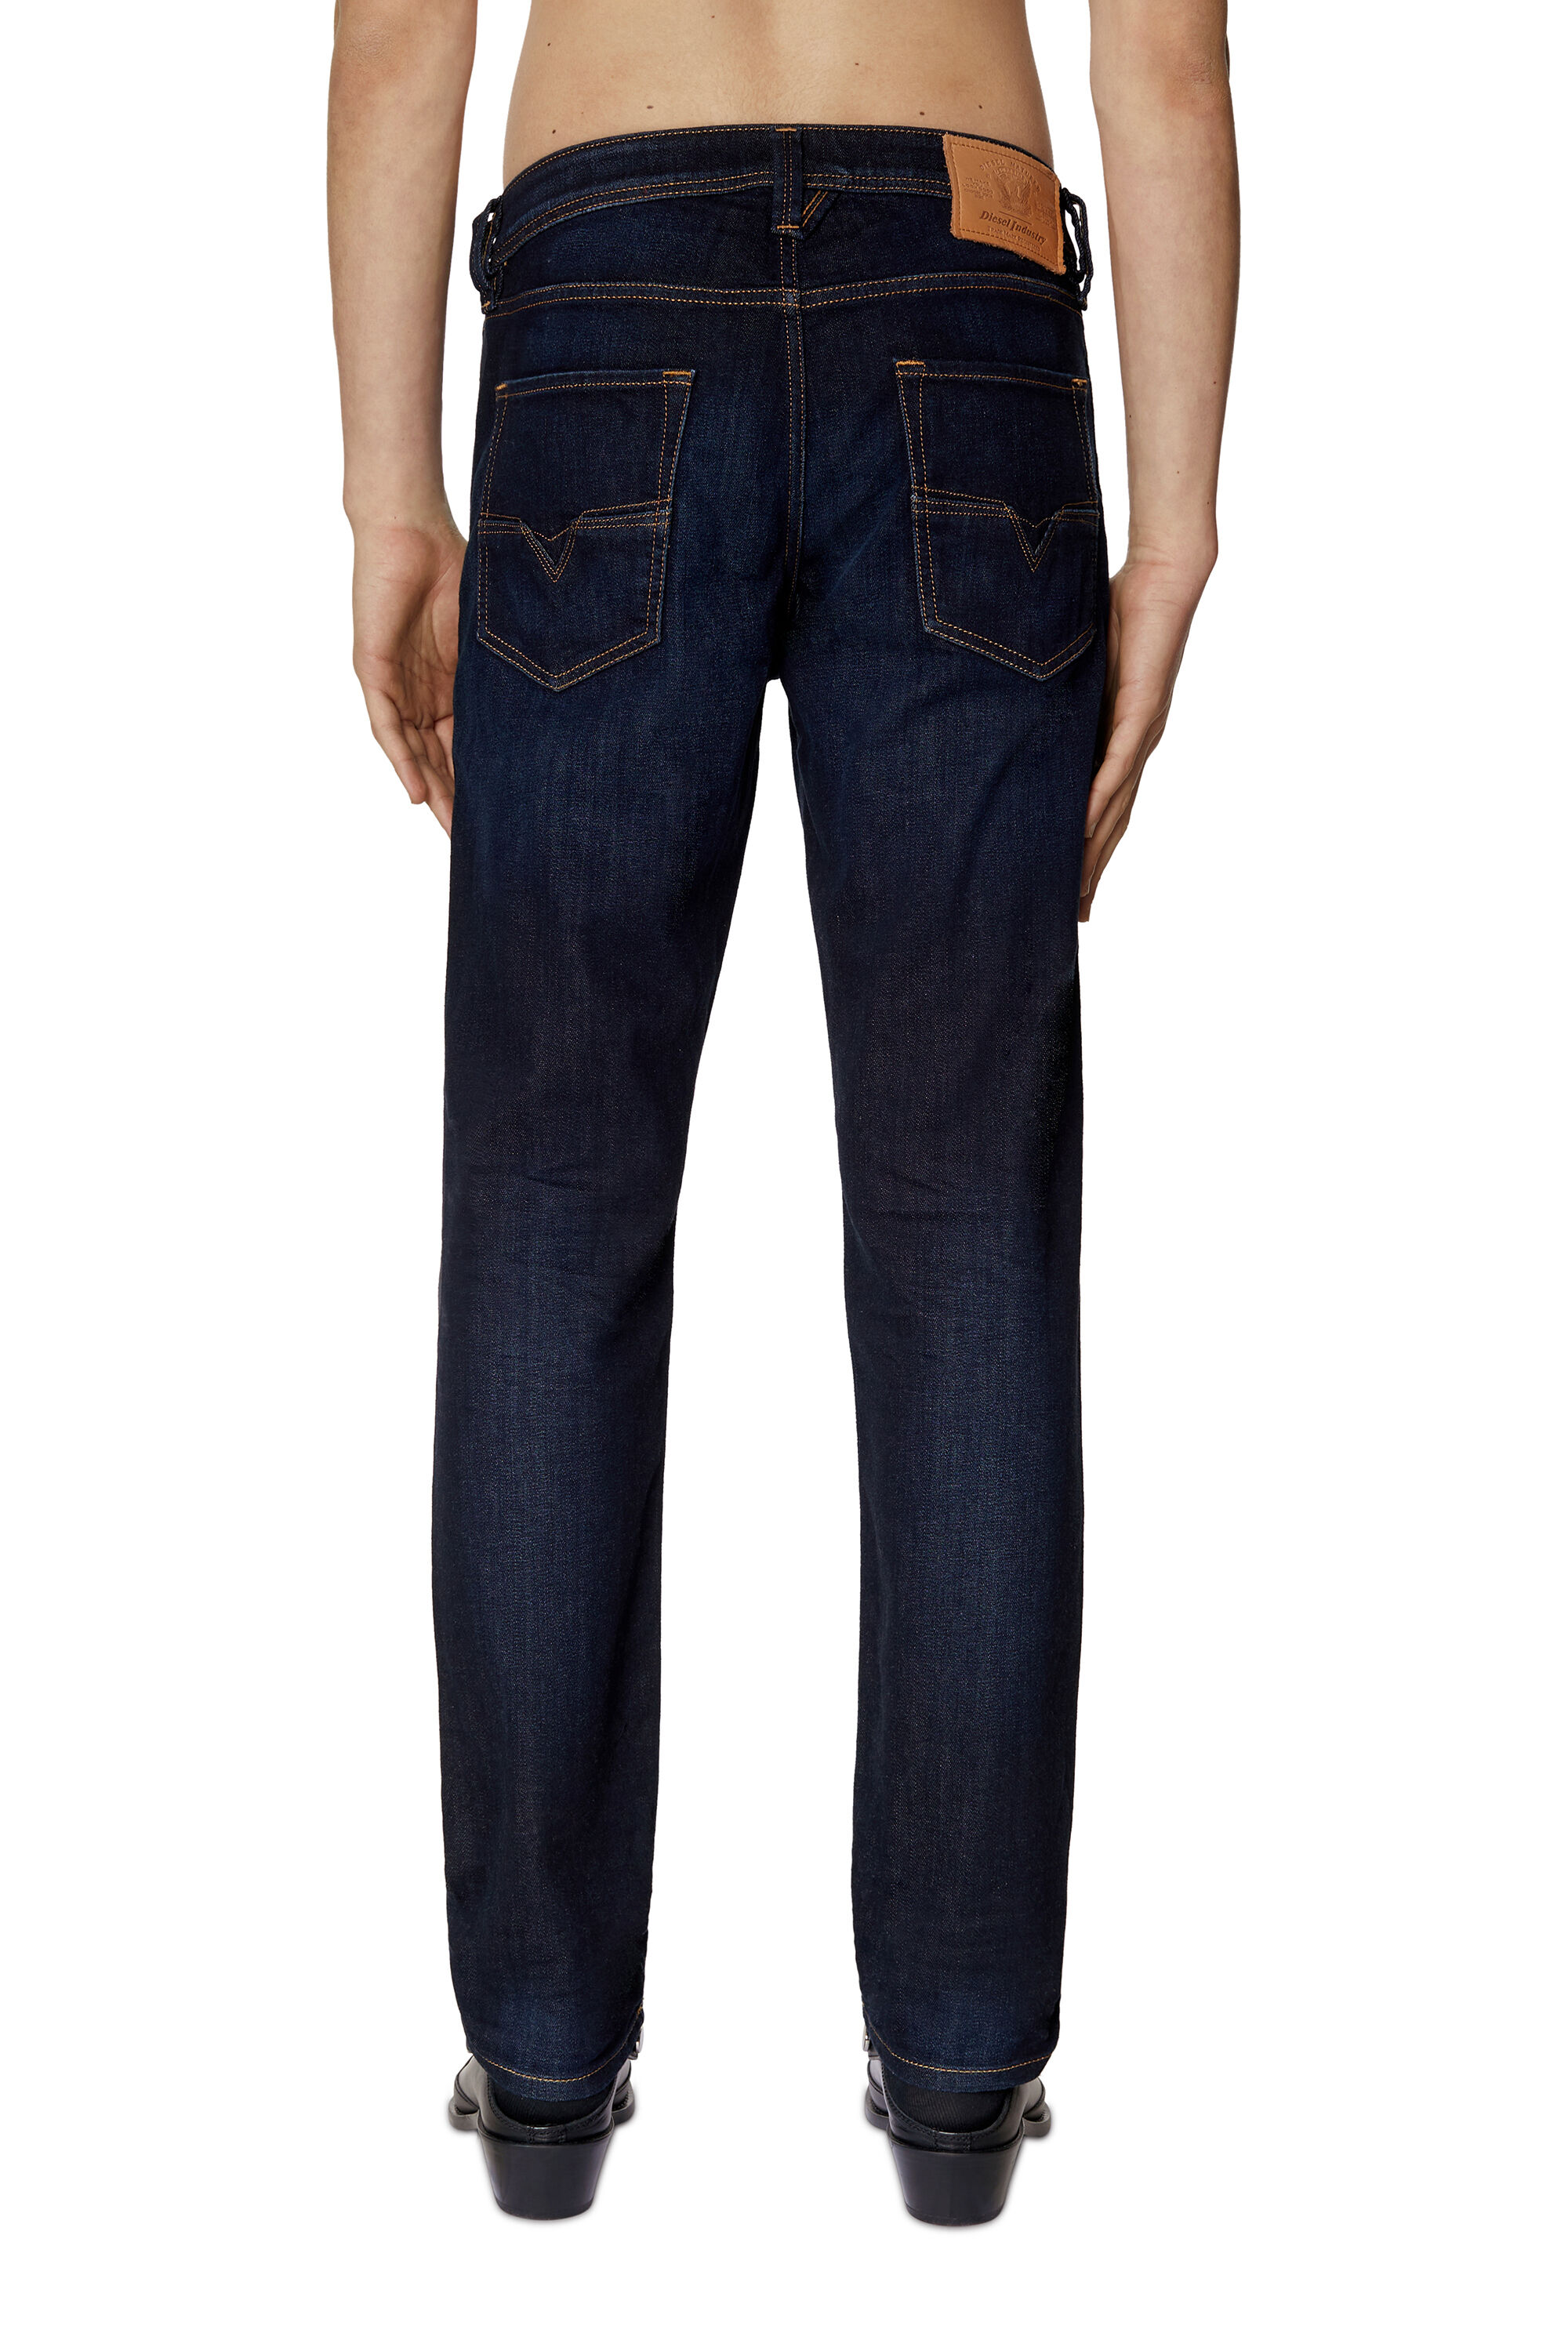 LARKEE-BEEX Man: Tapered Dark blue Jeans | Diesel.com